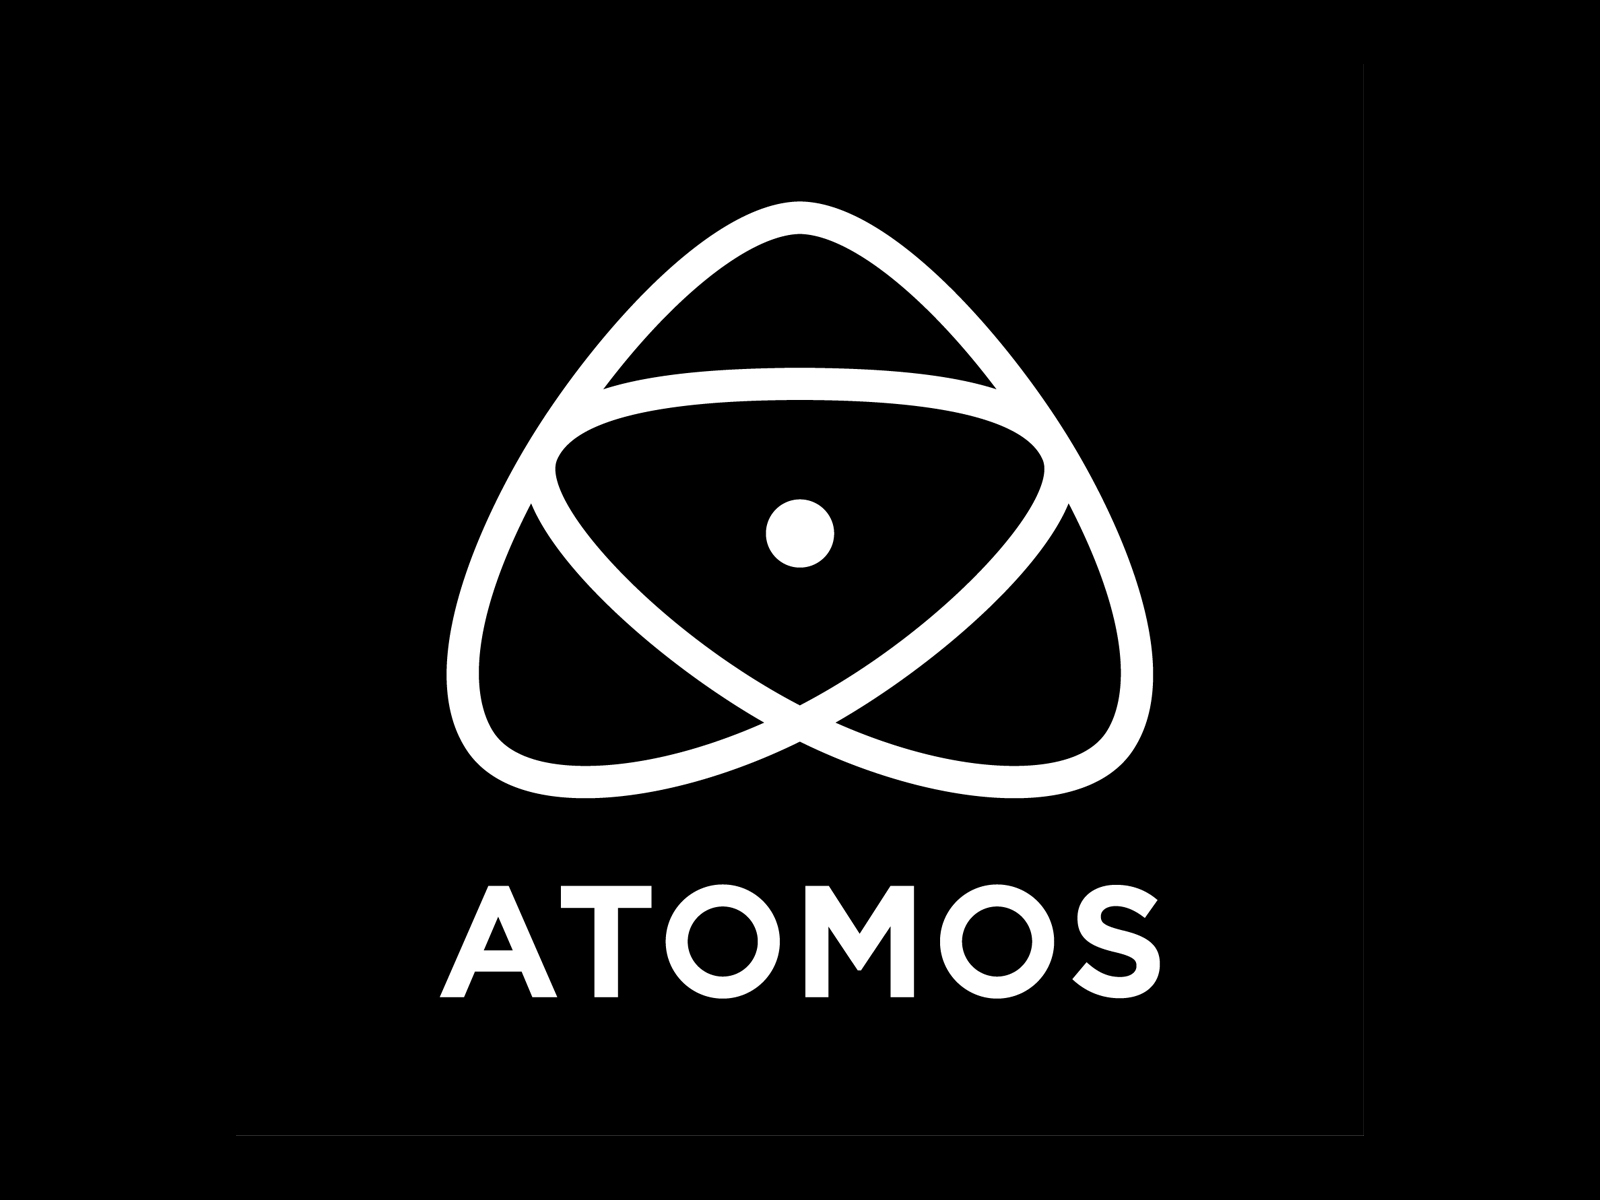 Atomos announces new Shogun series and Premiere Pro extension